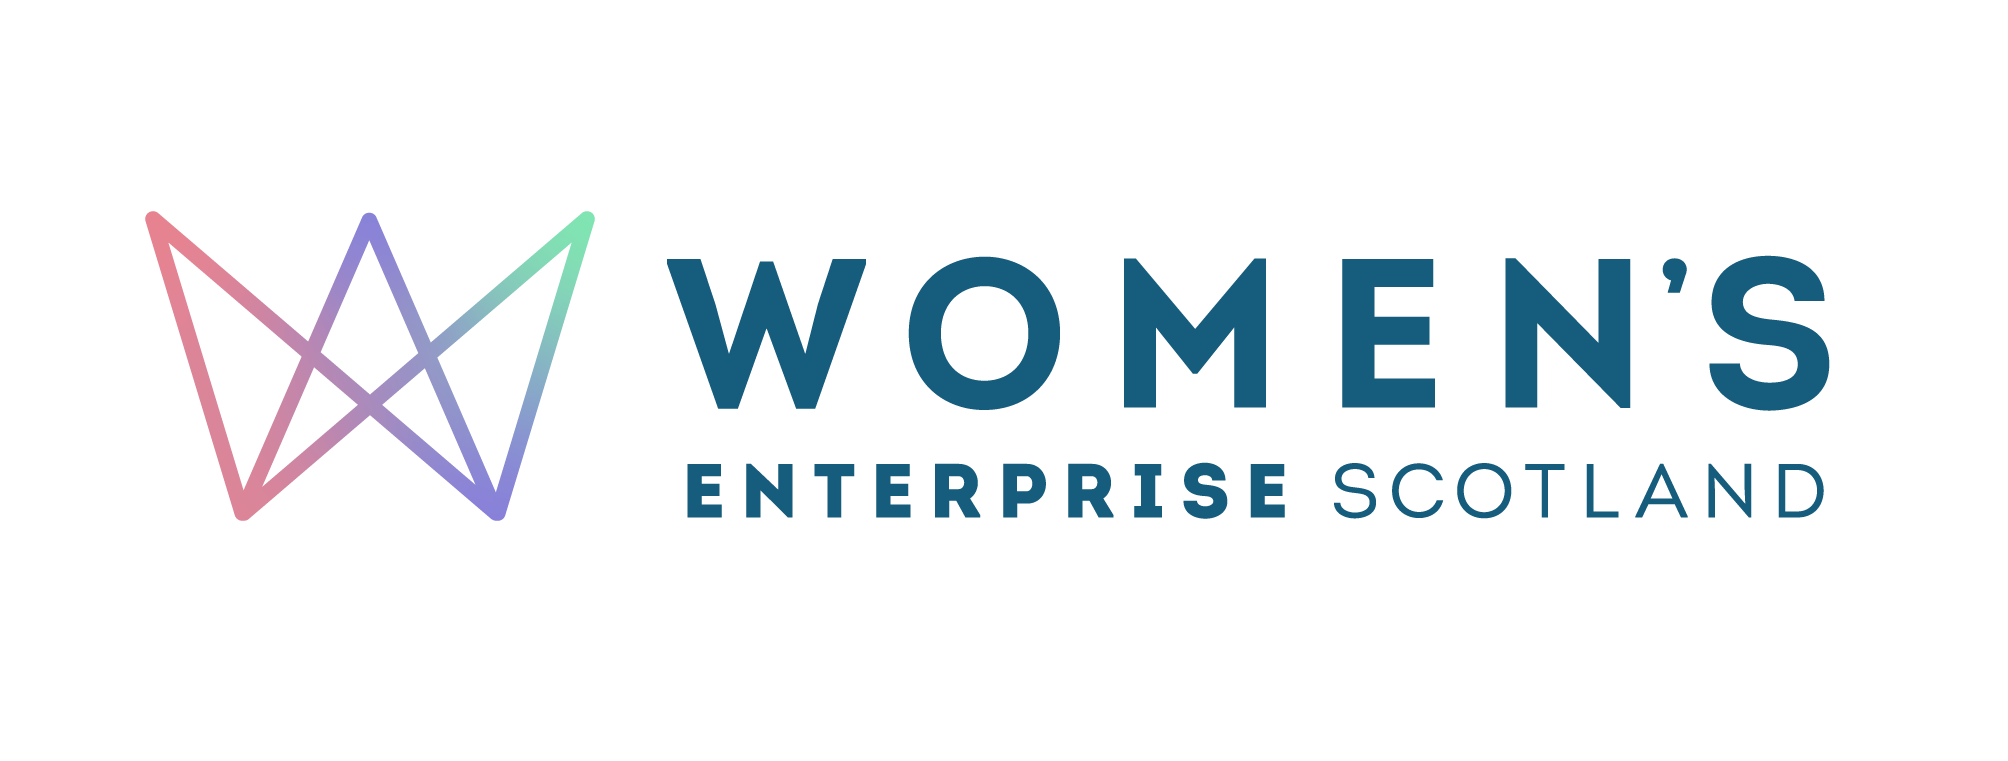 Women's Enterprise Scotland logo